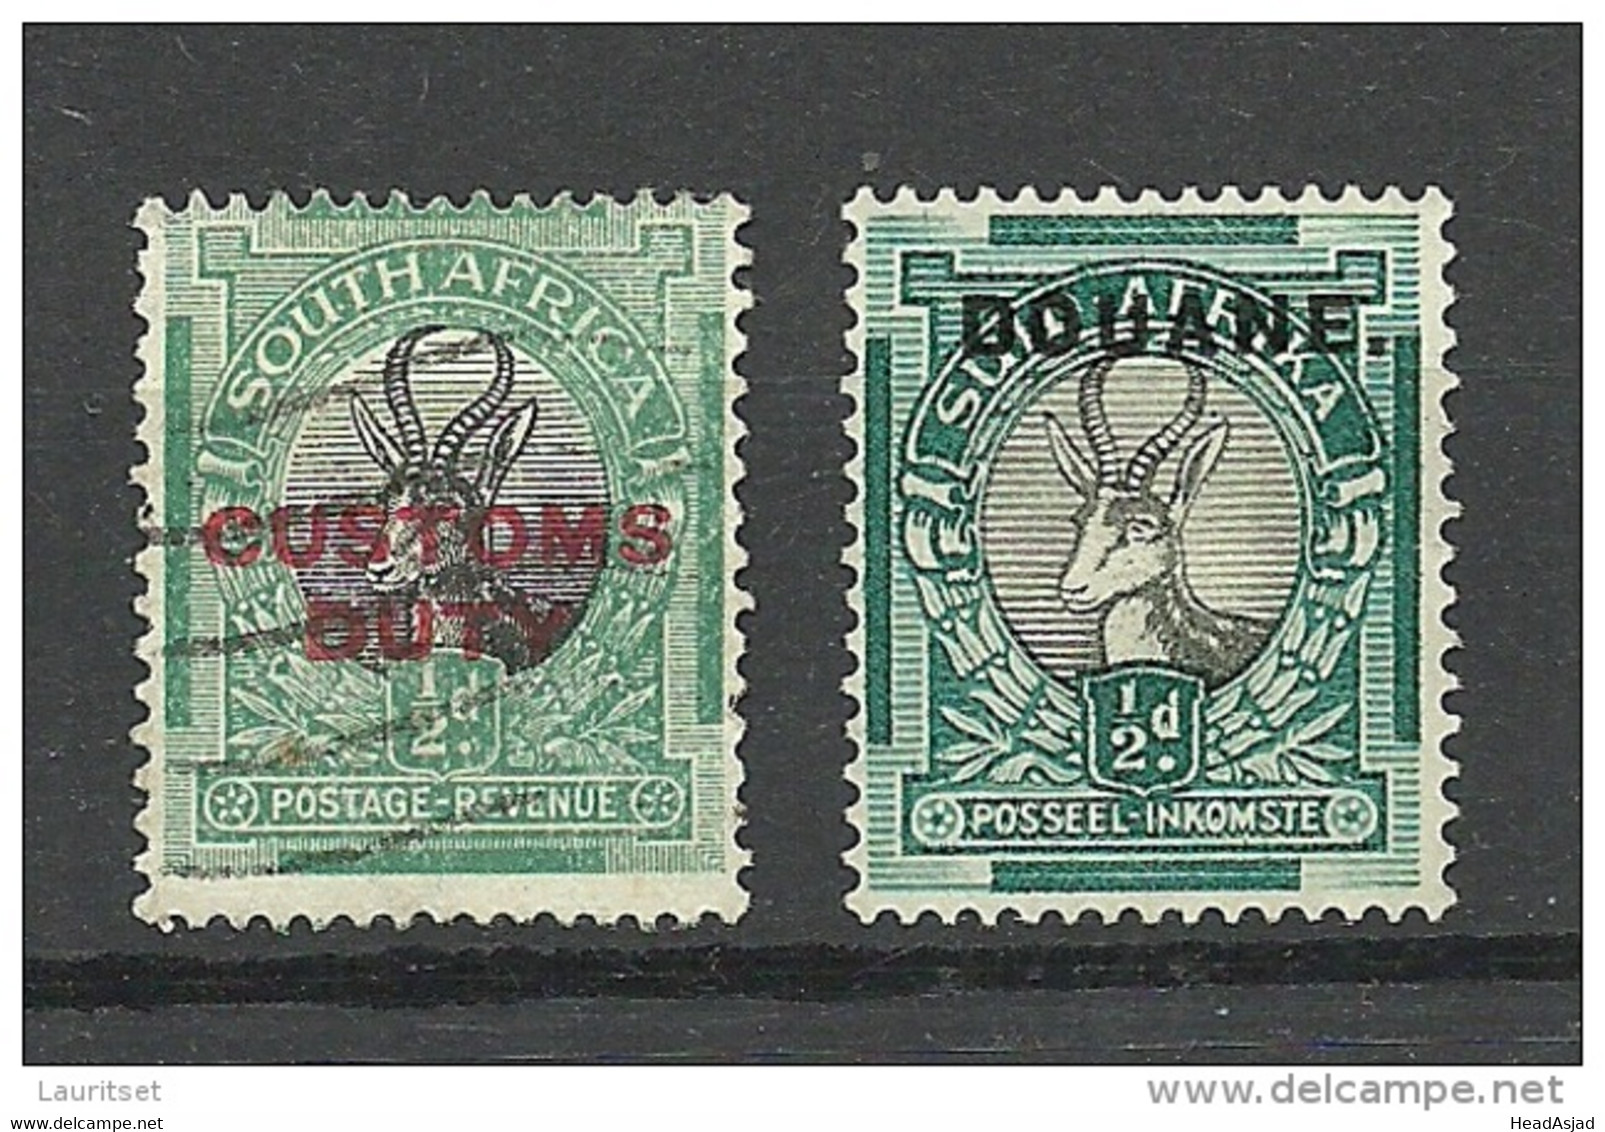 South-Africa Dpuane Customs Duty 2 Older Revenue Stamps With OPT - Dienstmarken